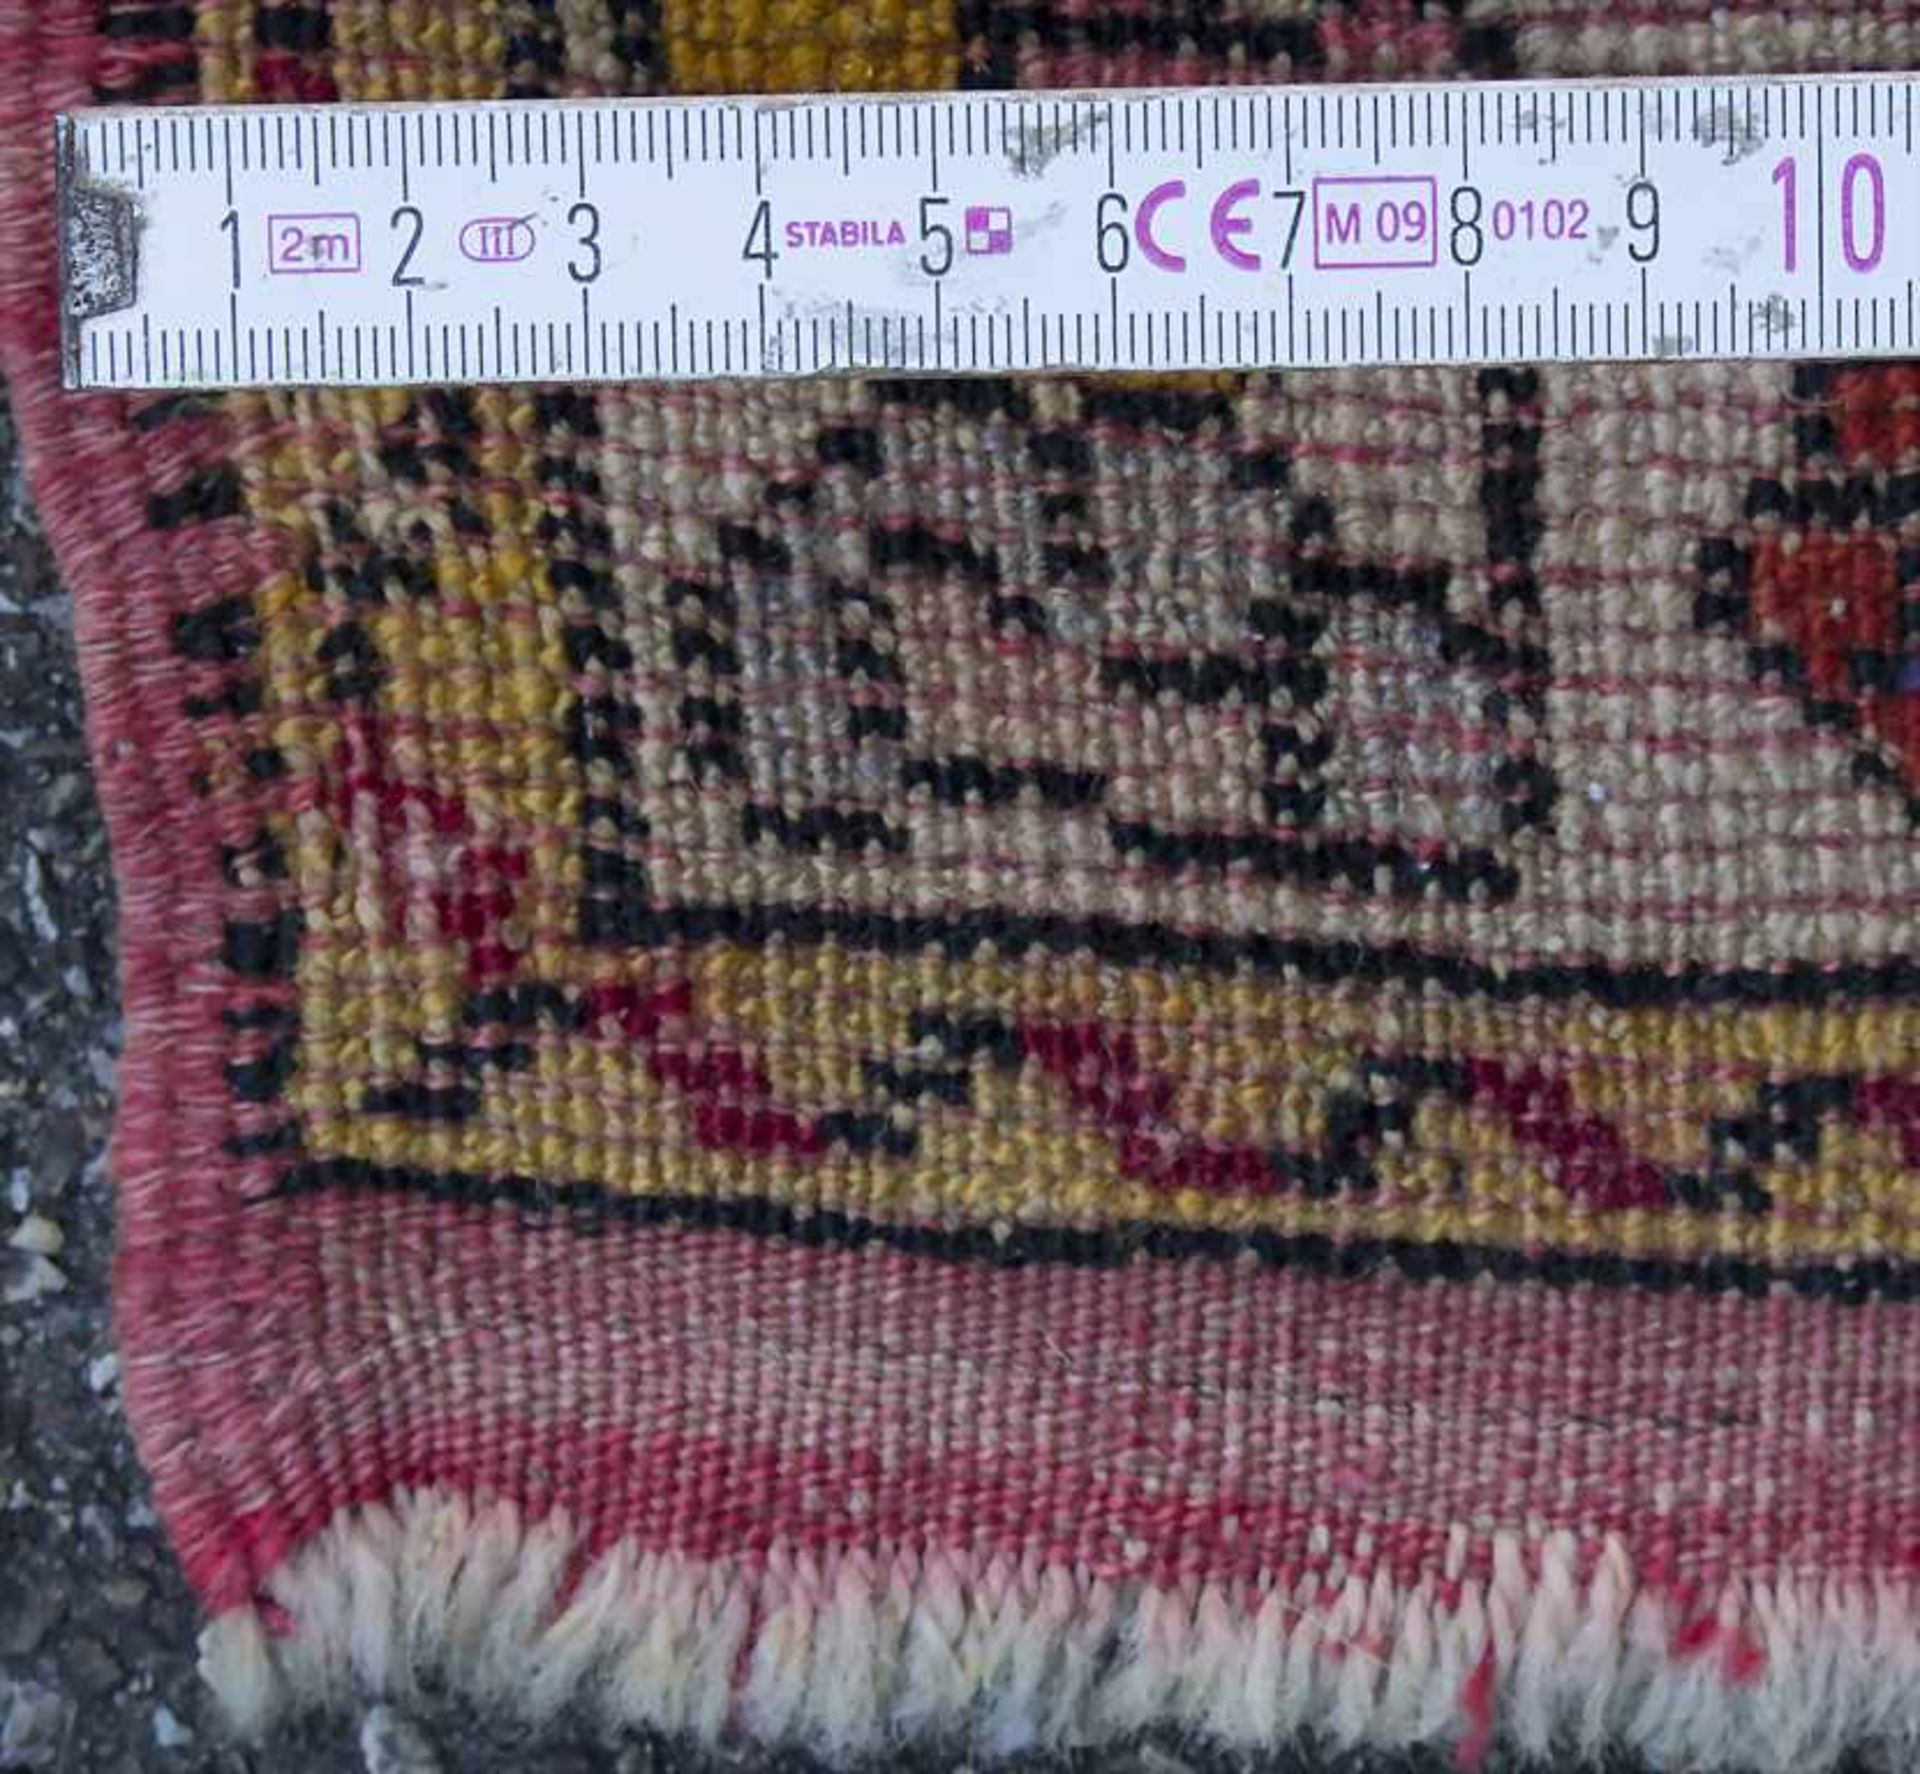 Kaukasischer Teppich / A caucasian carpetMaterial: Wolle auf Wolle, Maße: 80 x 78 cm, Zustand: gut - Image 7 of 7